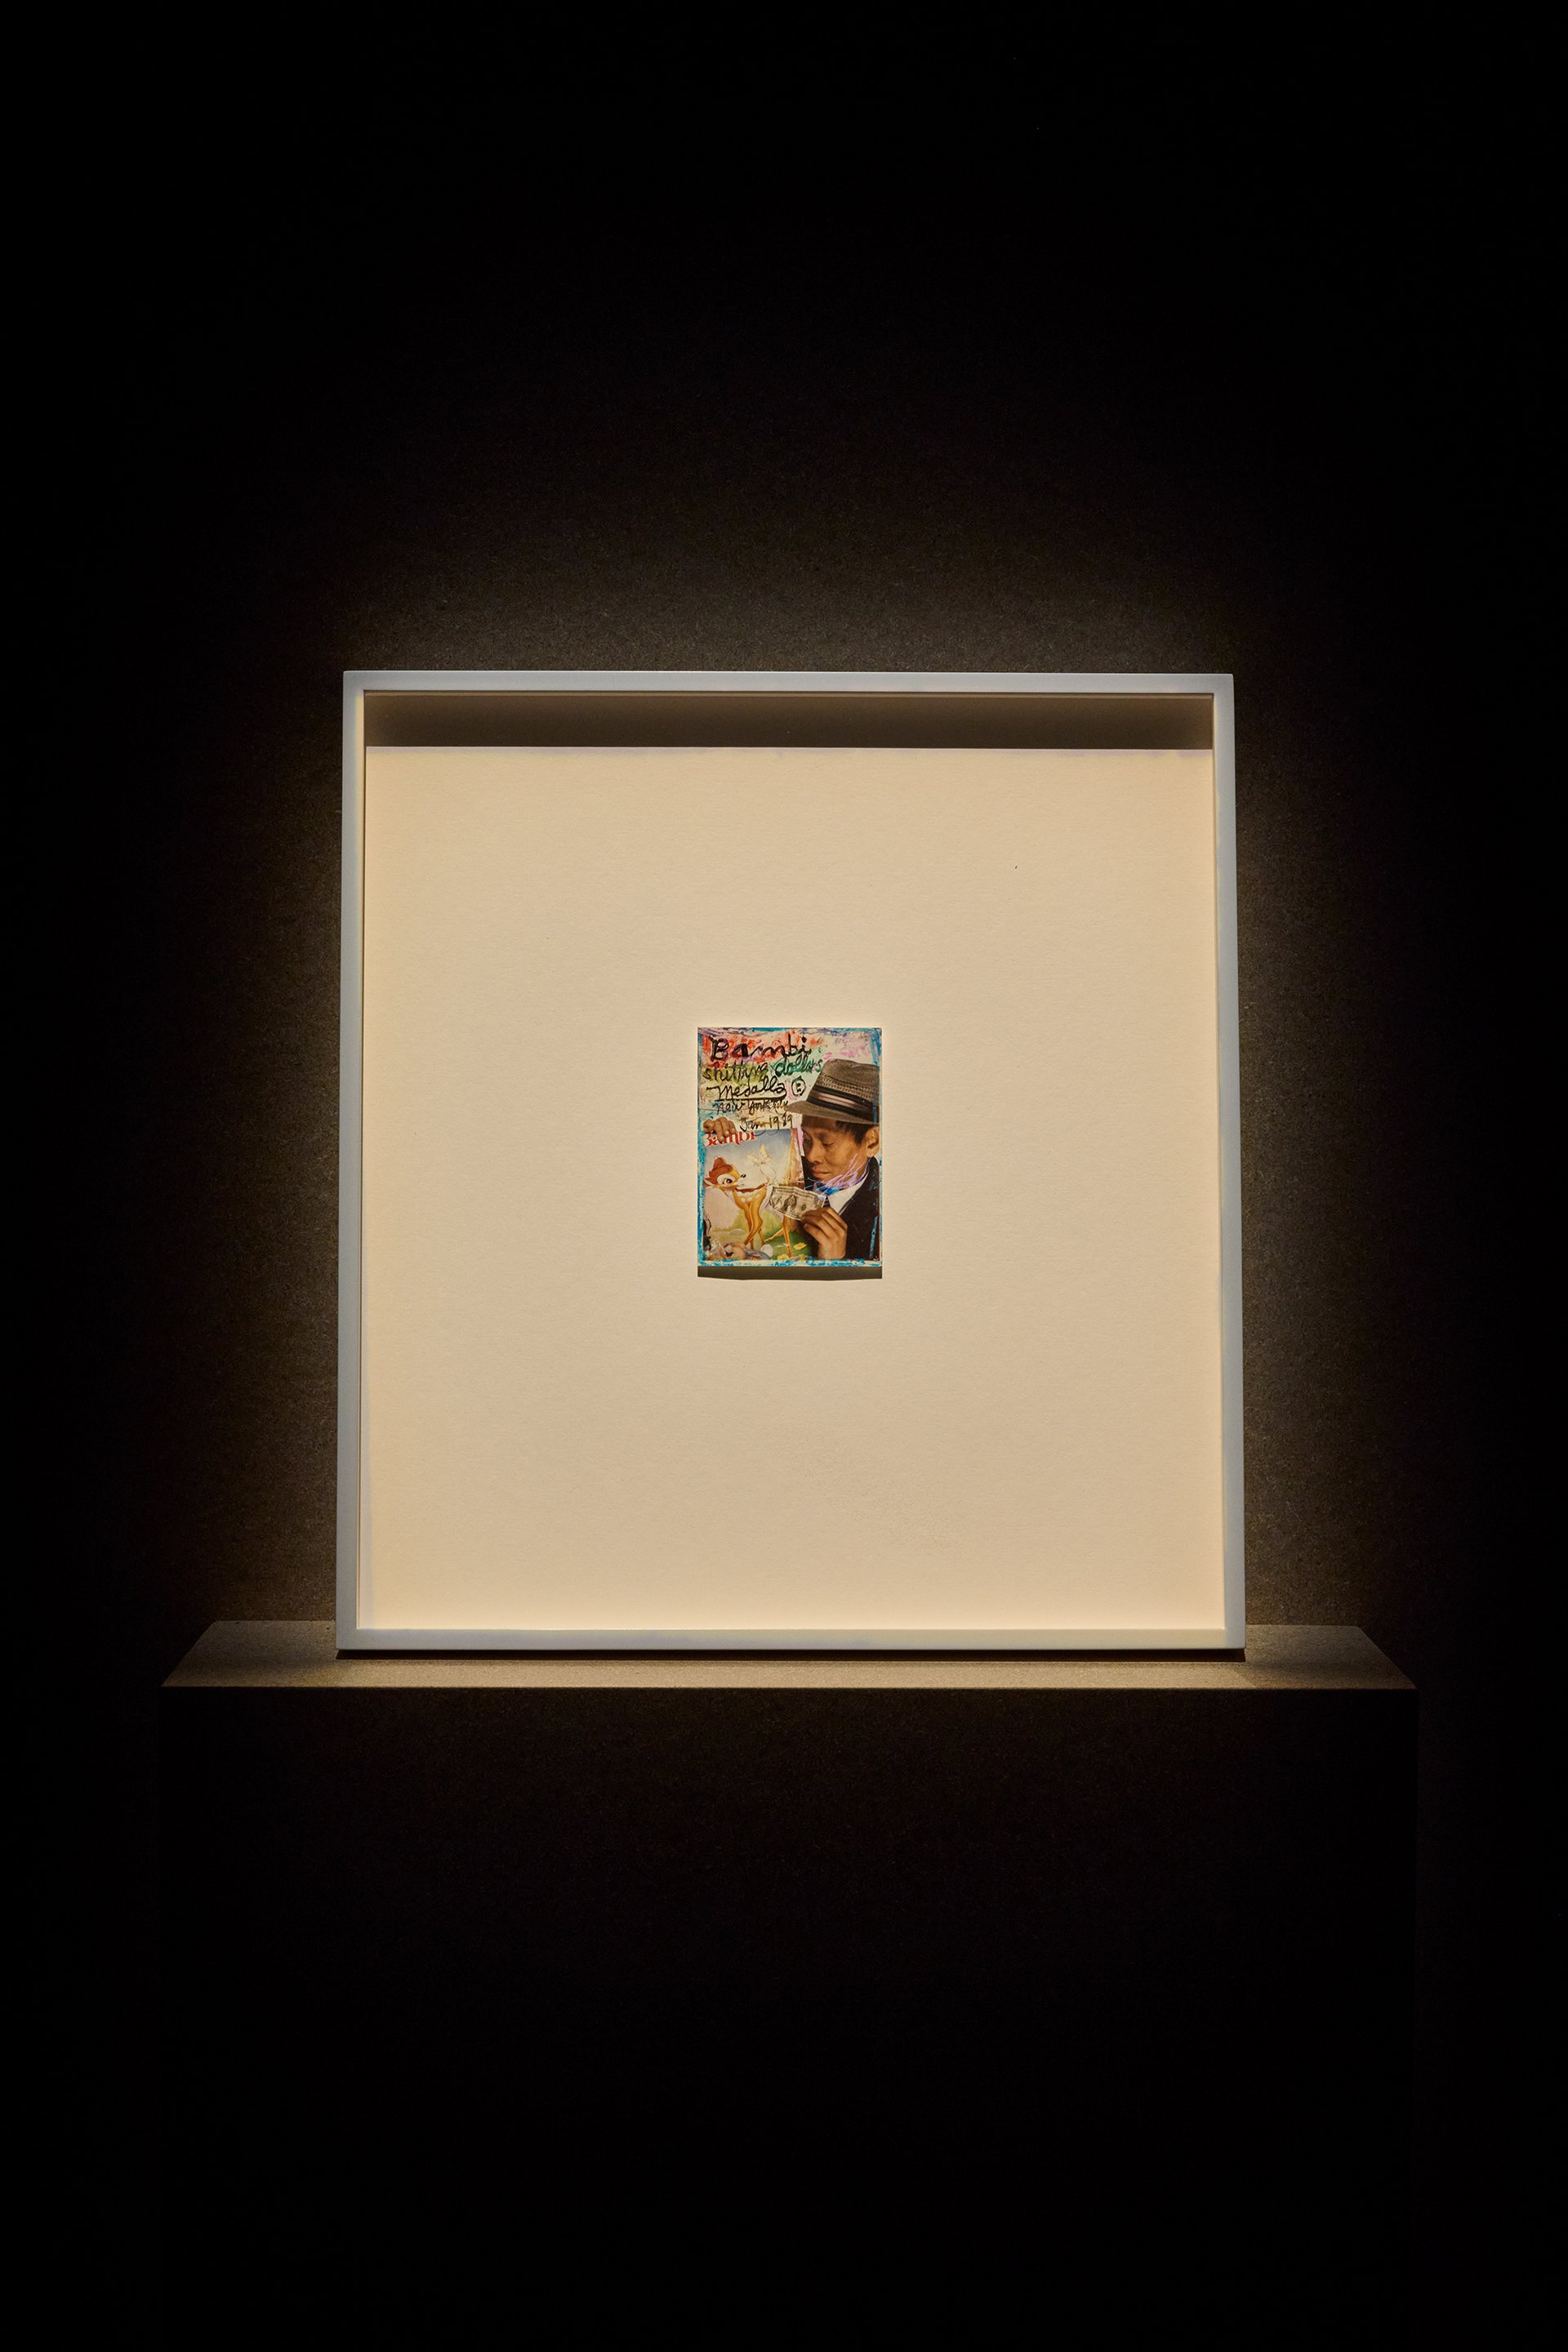 David Medalla, ‘Bambi Shitting Dollars’, 1989, collage on paper, 11,5 x 9 cm, Bonner Kunstverein, 2021. Photo: Mareike Tocha.